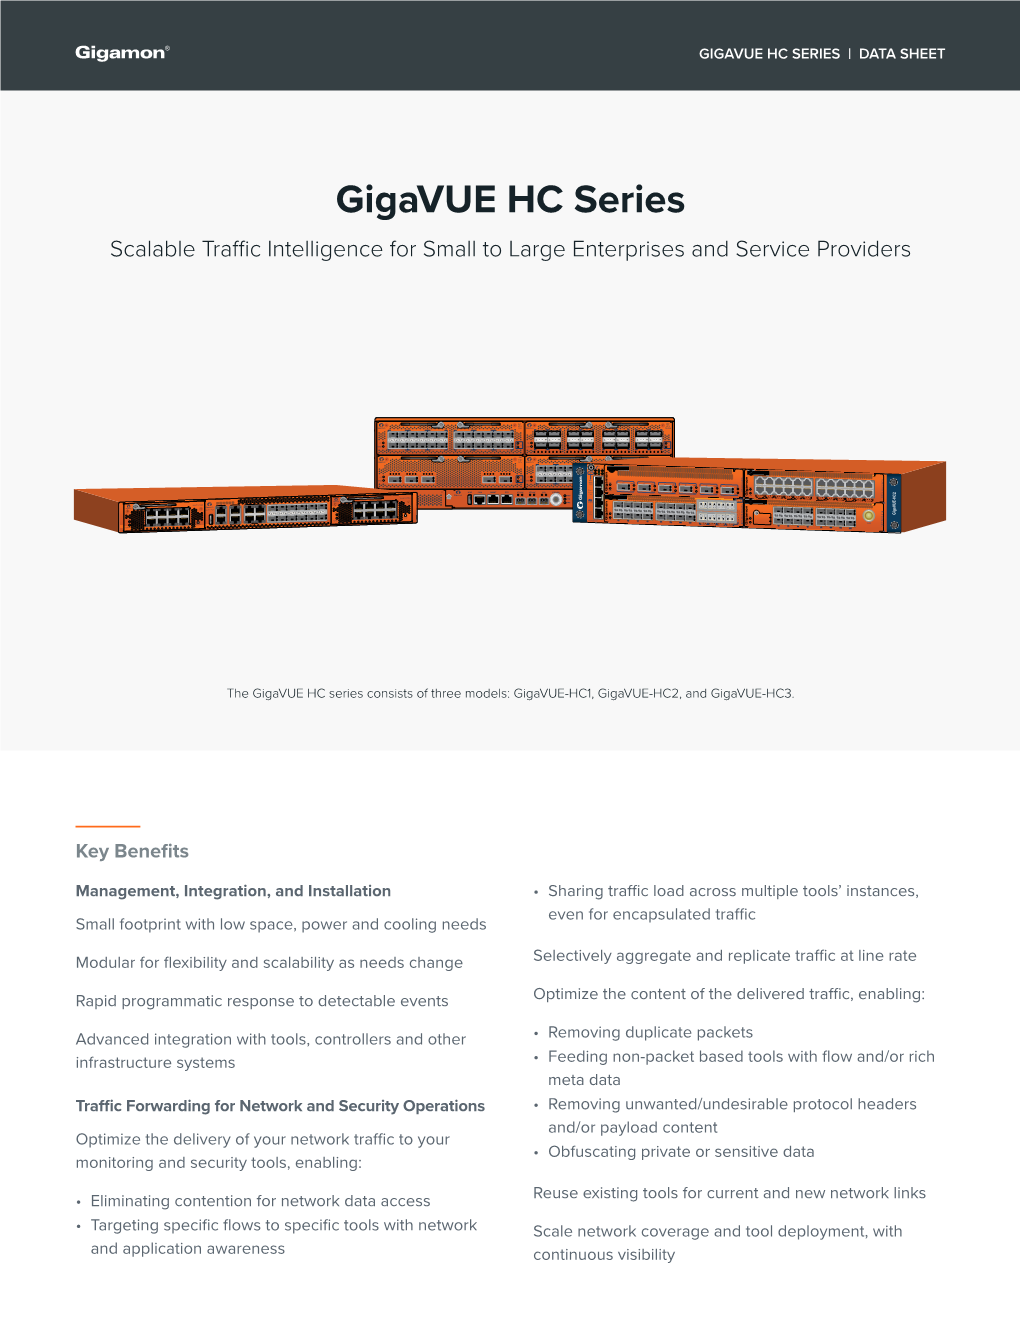 Gigavue HC Series Data Sheet